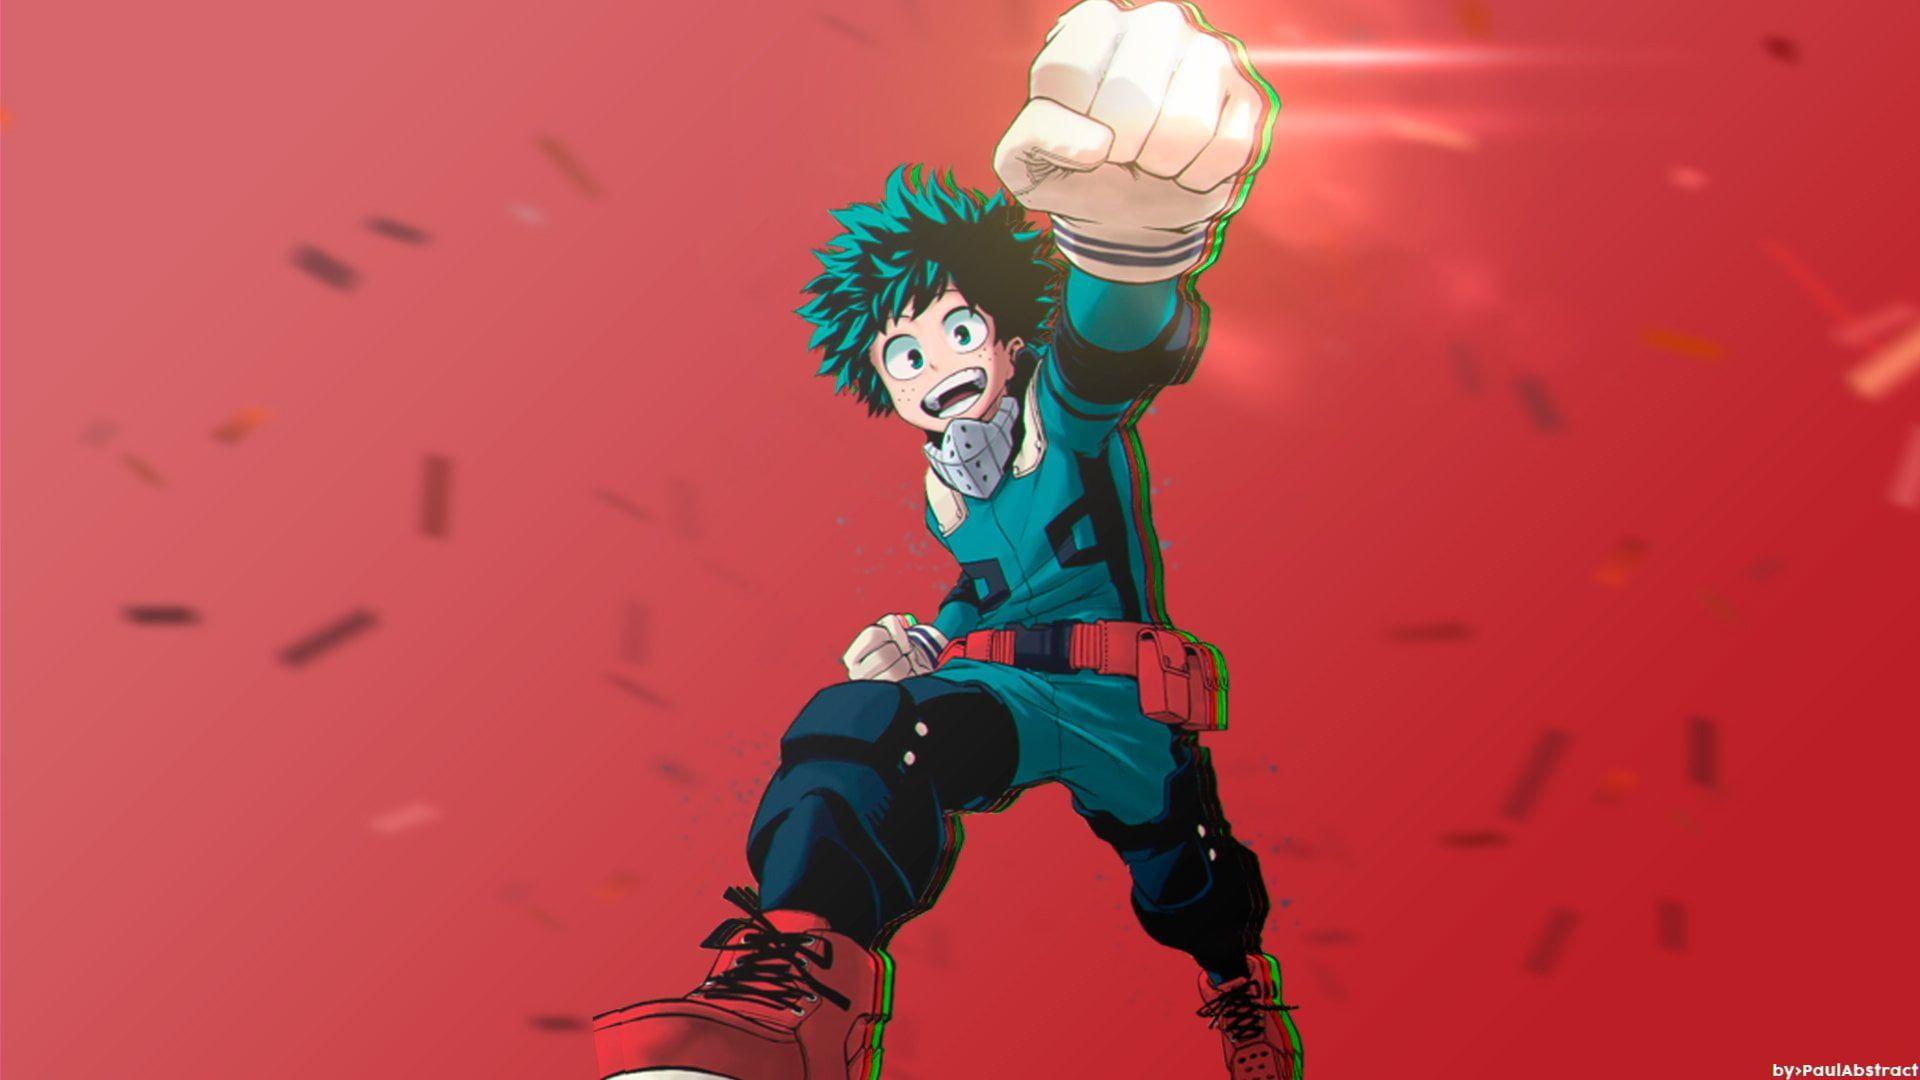 Green Haired Anime Character Wallpaper #Anime My Hero Academia Boku No Hero Academia Izuku Midoriya P #w. Character Wallpaper, Boku No Hero Academia, My Hero